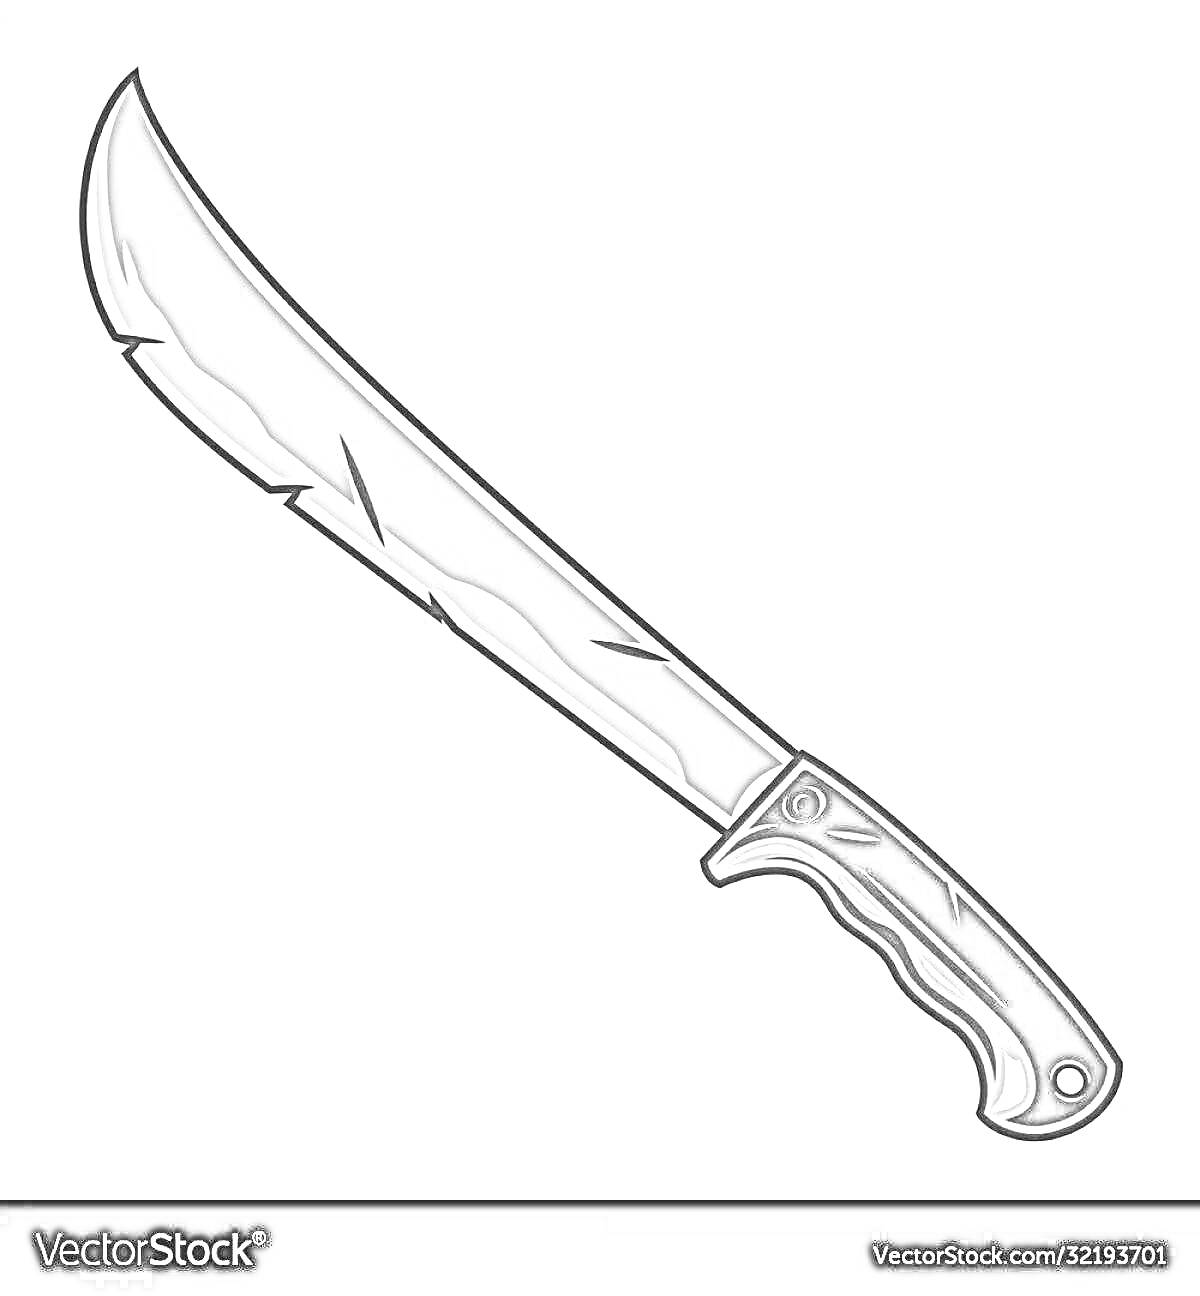 На раскраске изображено: Мачете, Нож, Оружие, Лезвие, Ручка, Металл, Изогнутый, Инструмент